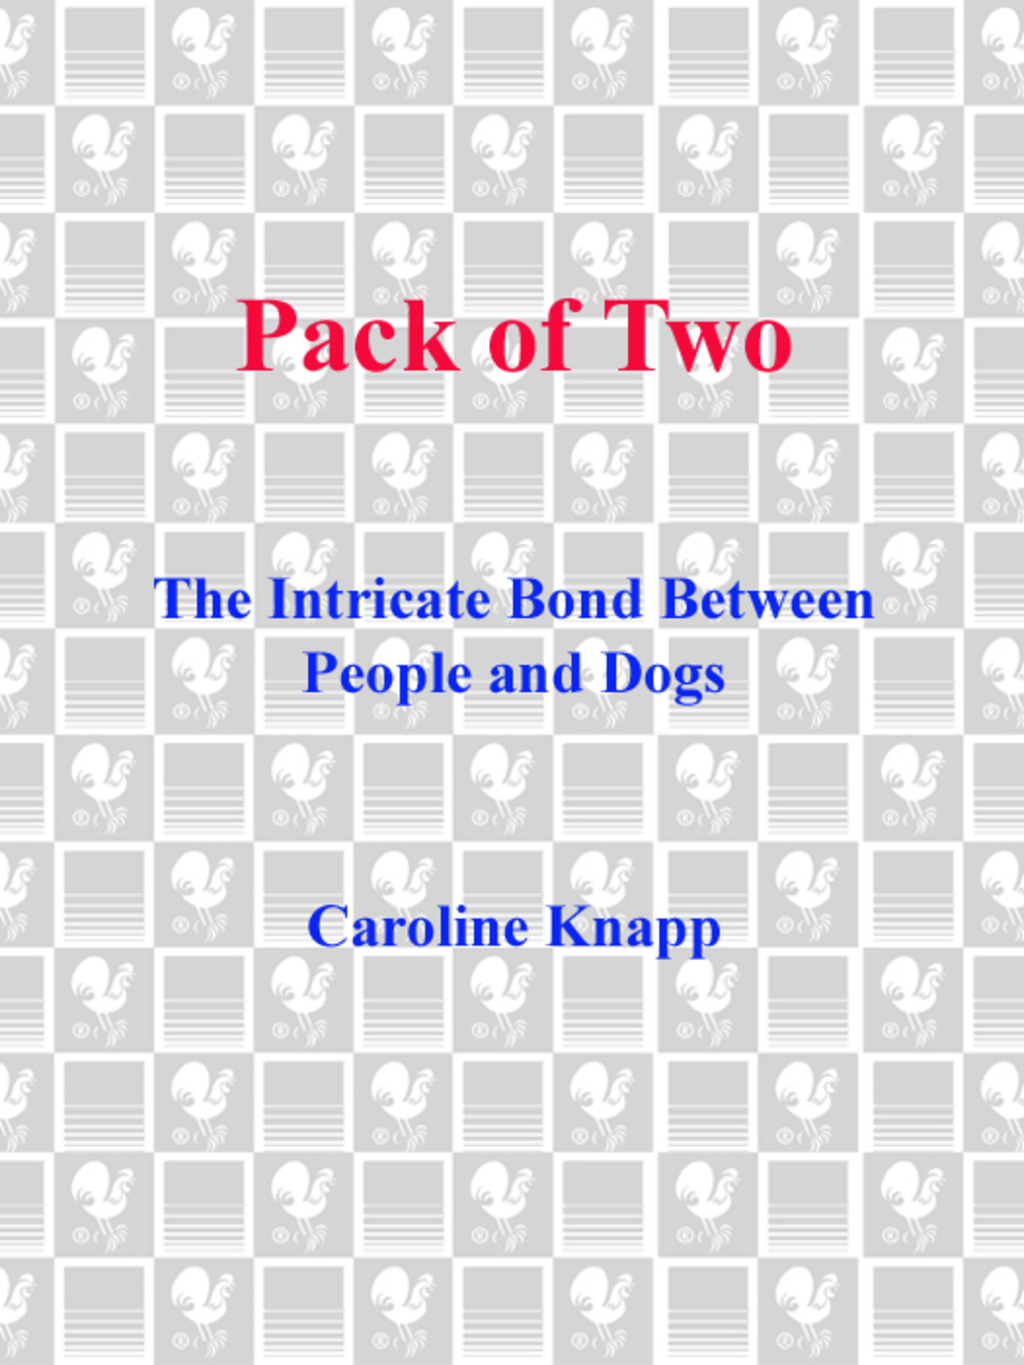 Pack of Two (eBook) - Caroline Knapp,